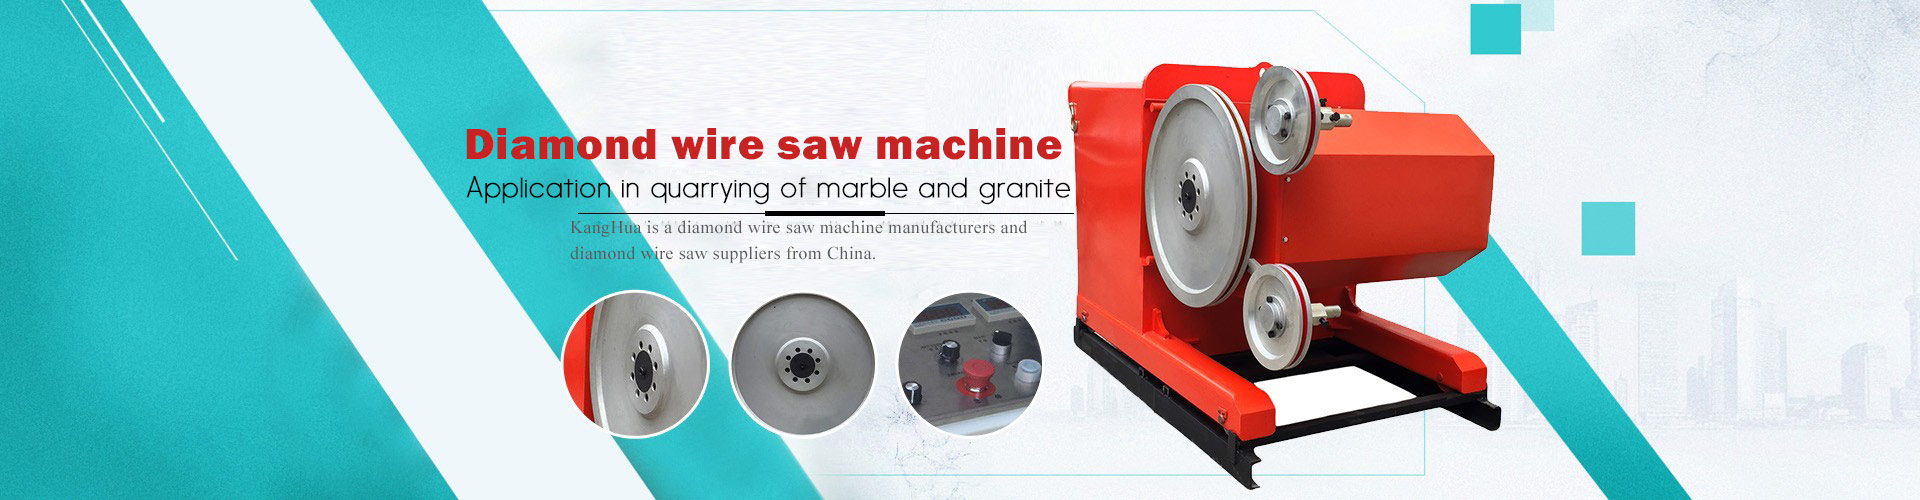 diamond wire saw machine for quarrying granite